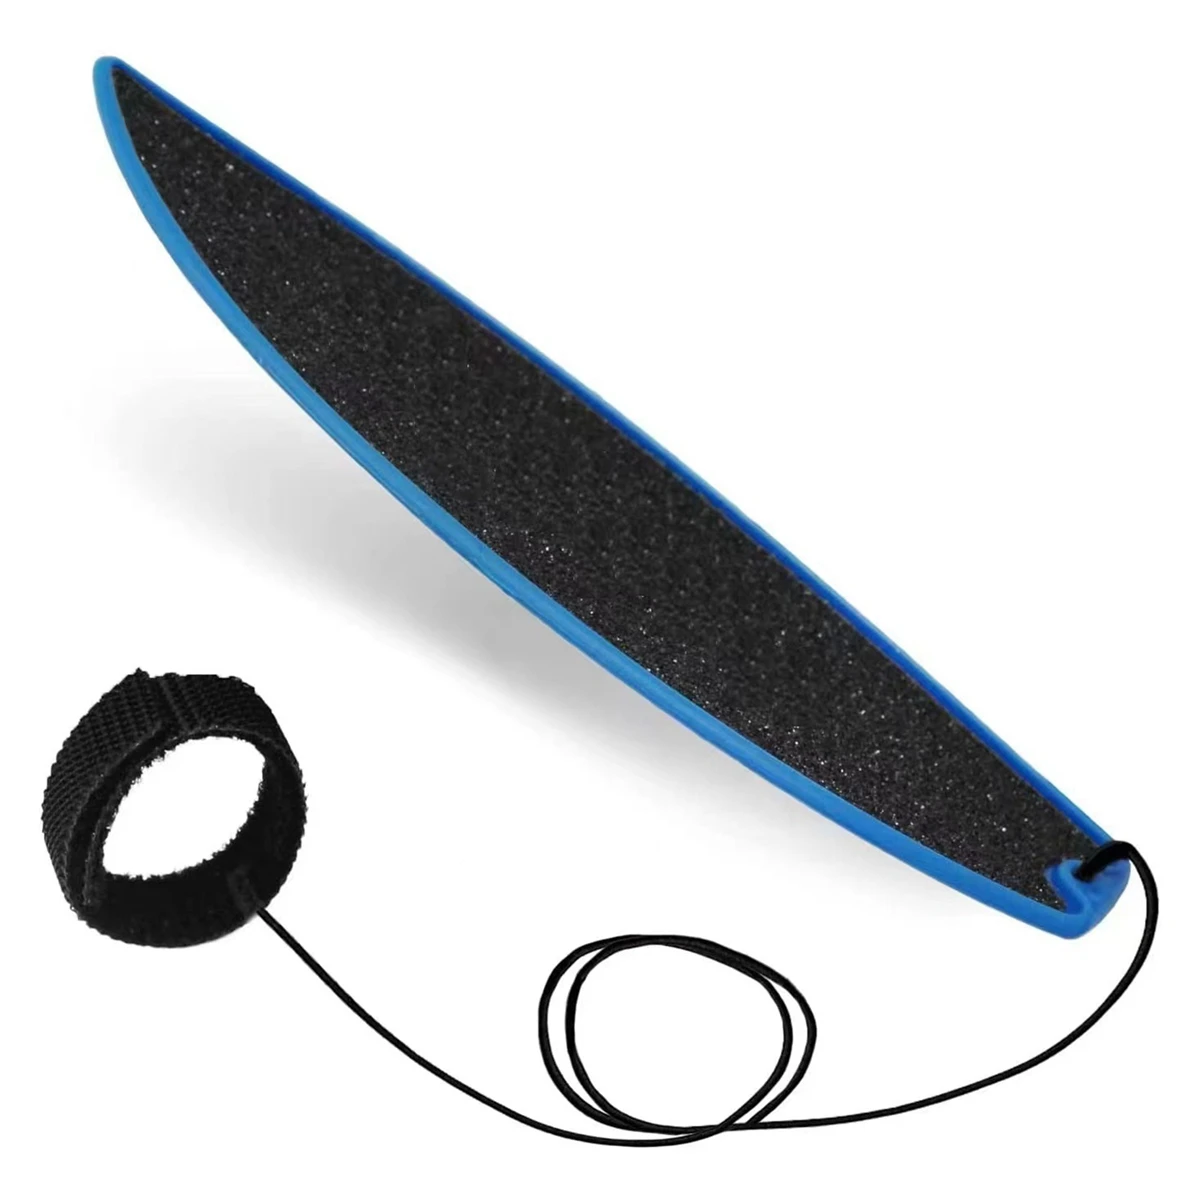 Finger Surfboard,Finger Surf Boards,Fingertip Surfboard for Adults Teens Boys Girls to Hone Their Surfer Skills,Blue